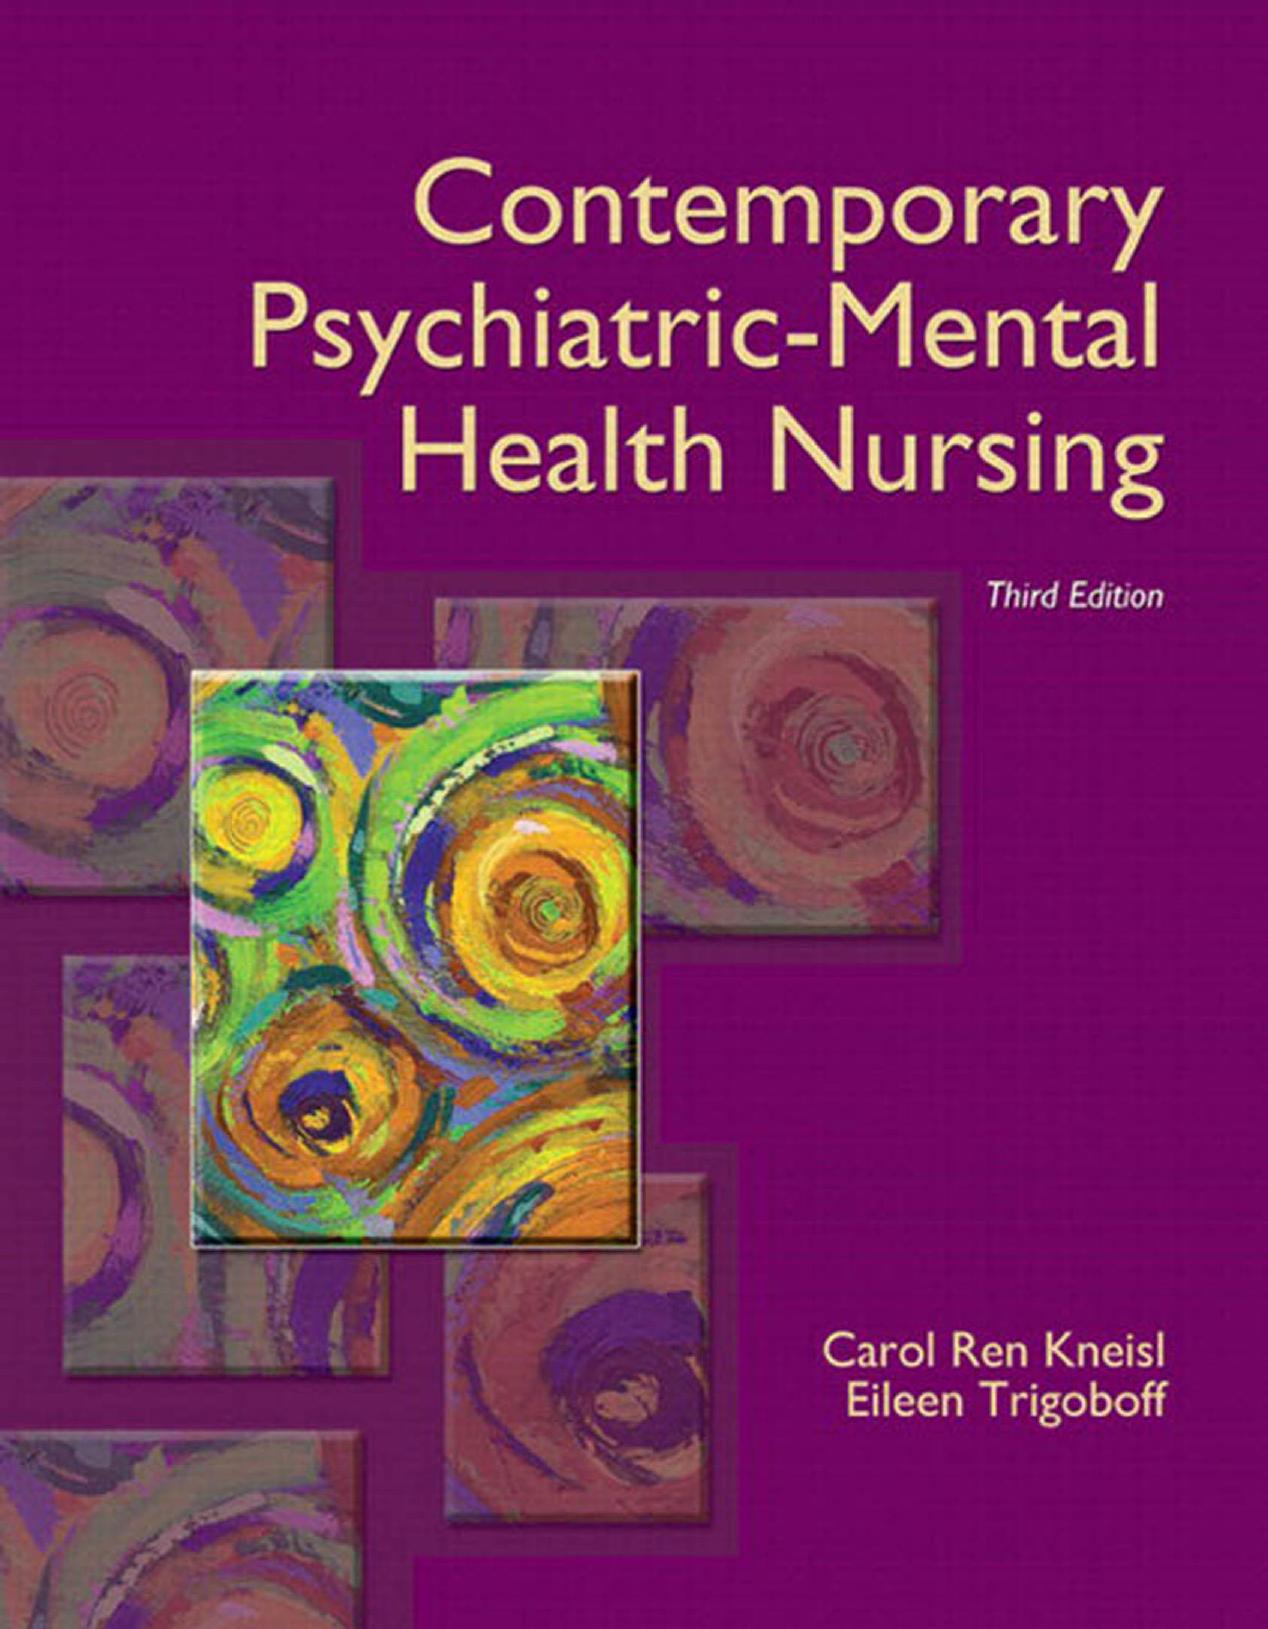 Contemporary Psychiatric-Mental Health Nursing 3rd Edition by Carol Ren Kneisl.jpg